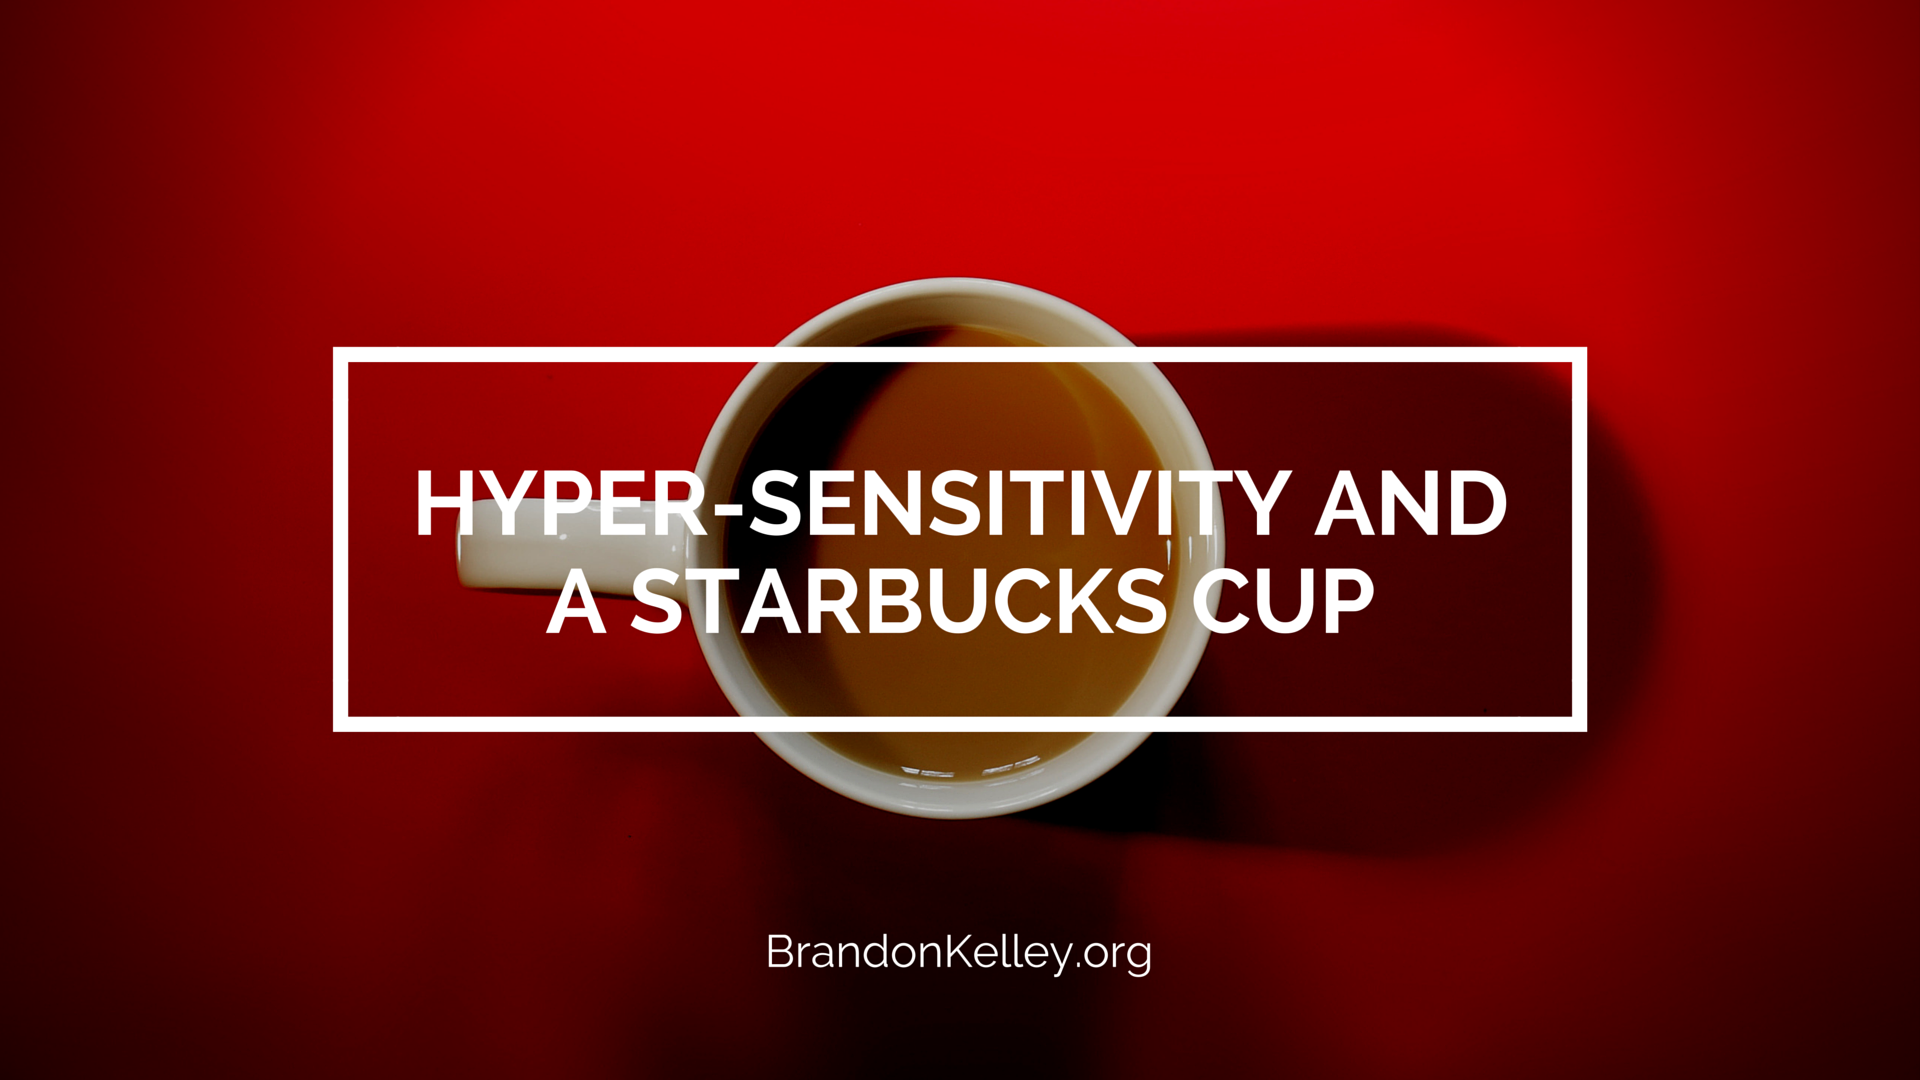 Hyper-Sensitivity and a Starbucks Cup